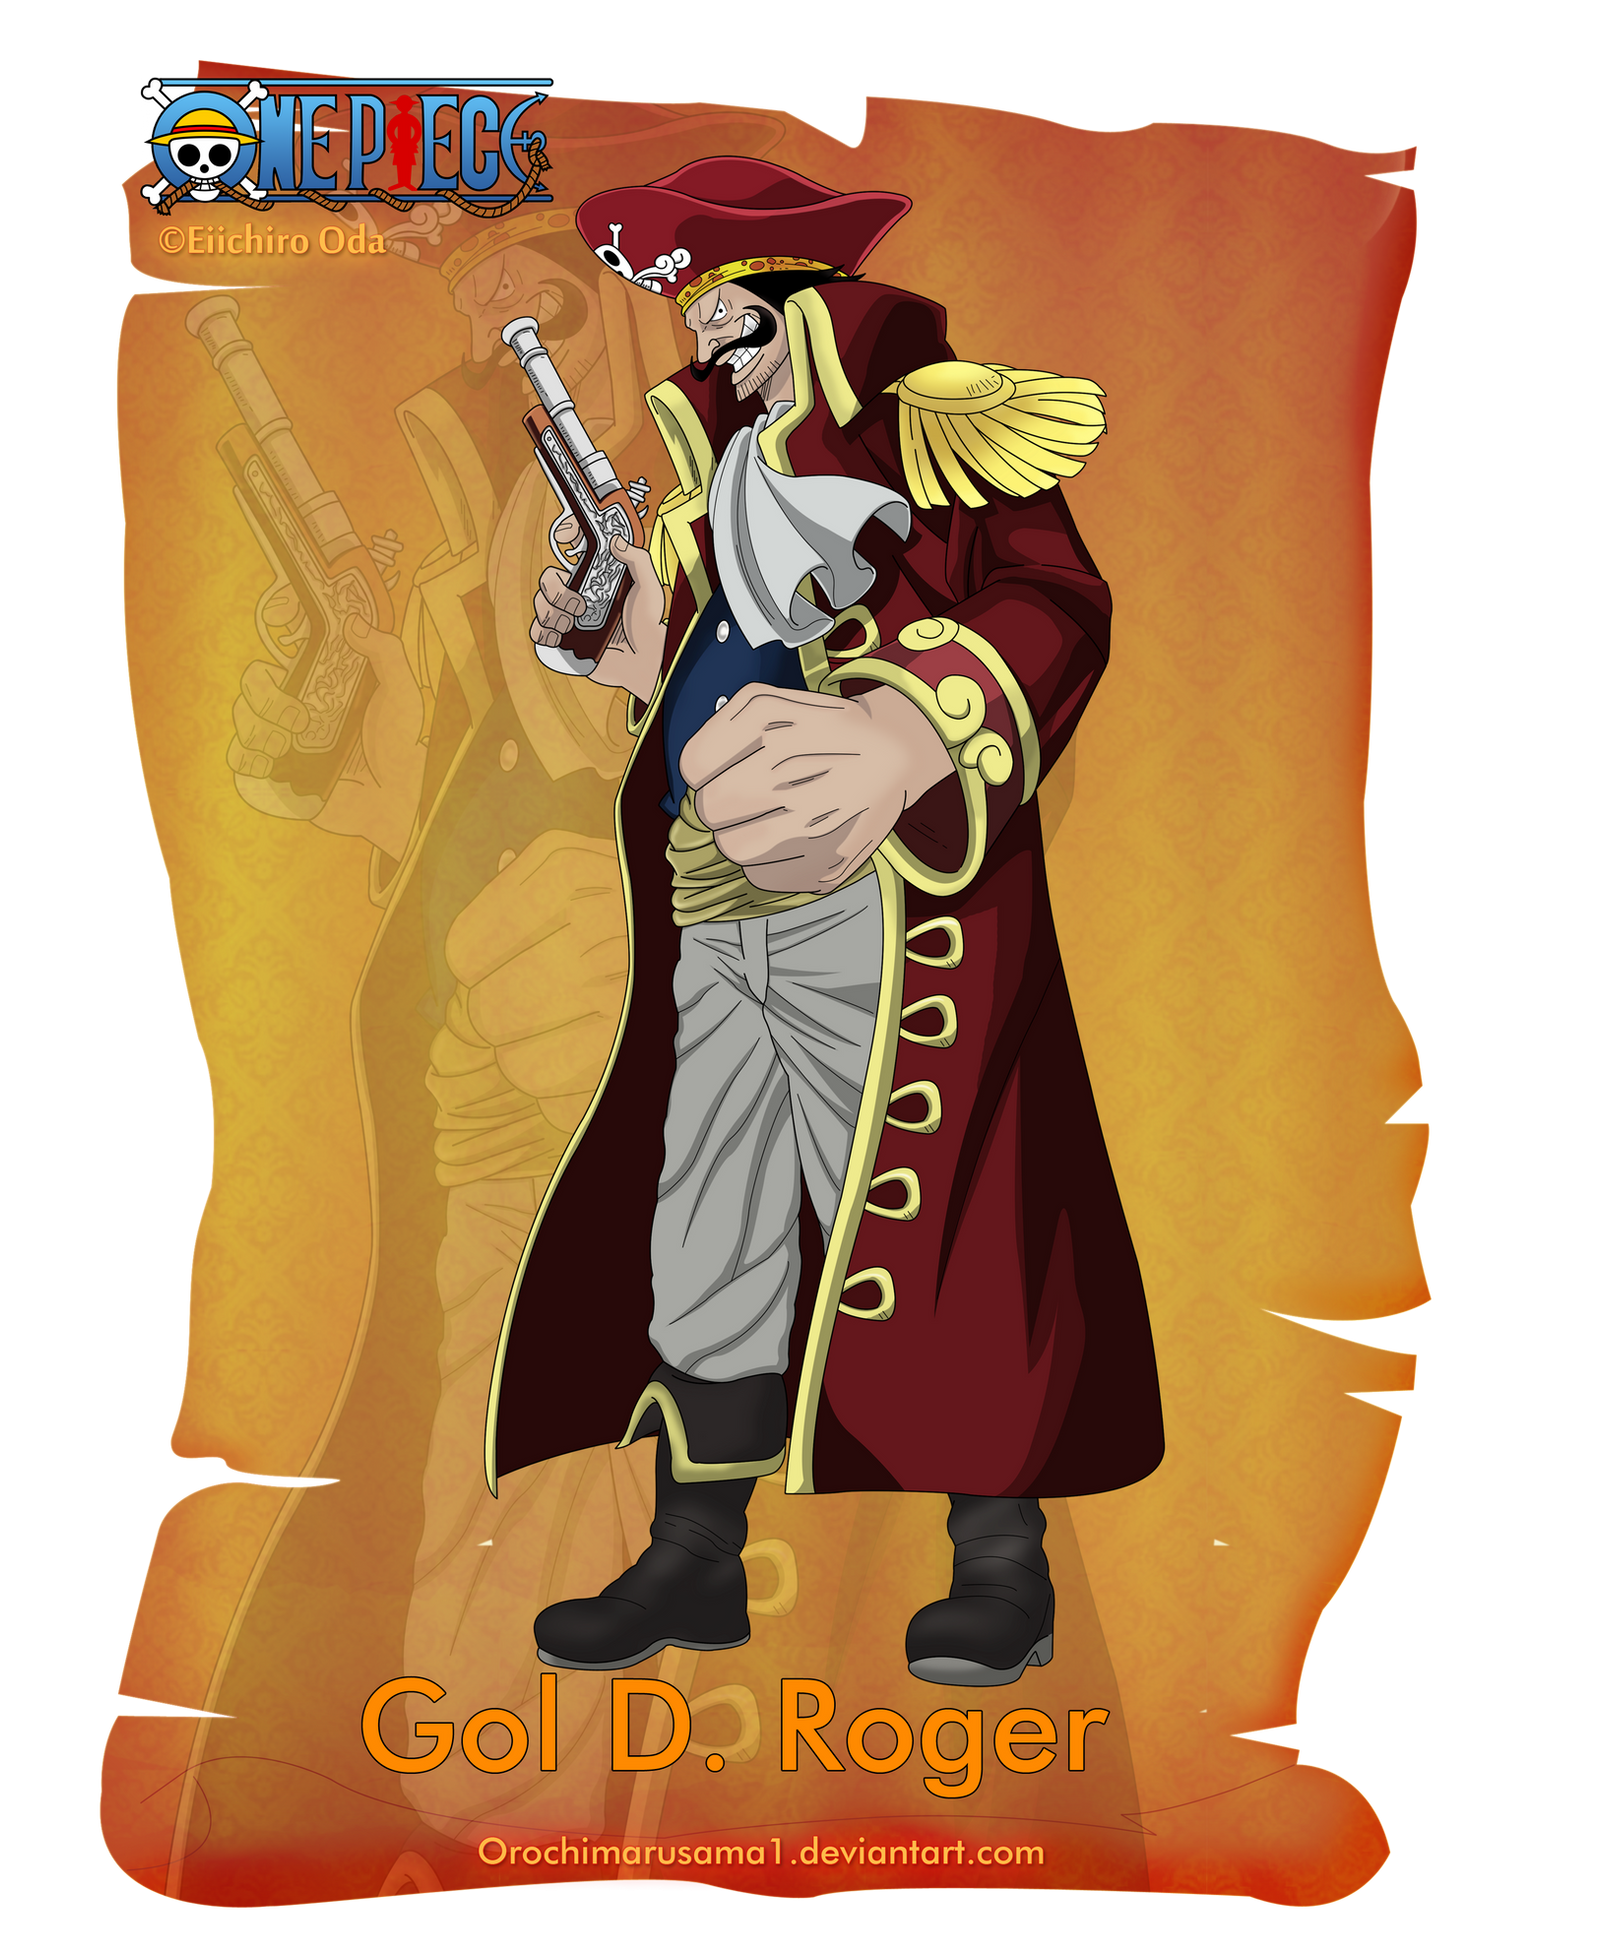 Gol D. Roger's crew: Gol D Roger - One Piece by caiquenadal on DeviantArt